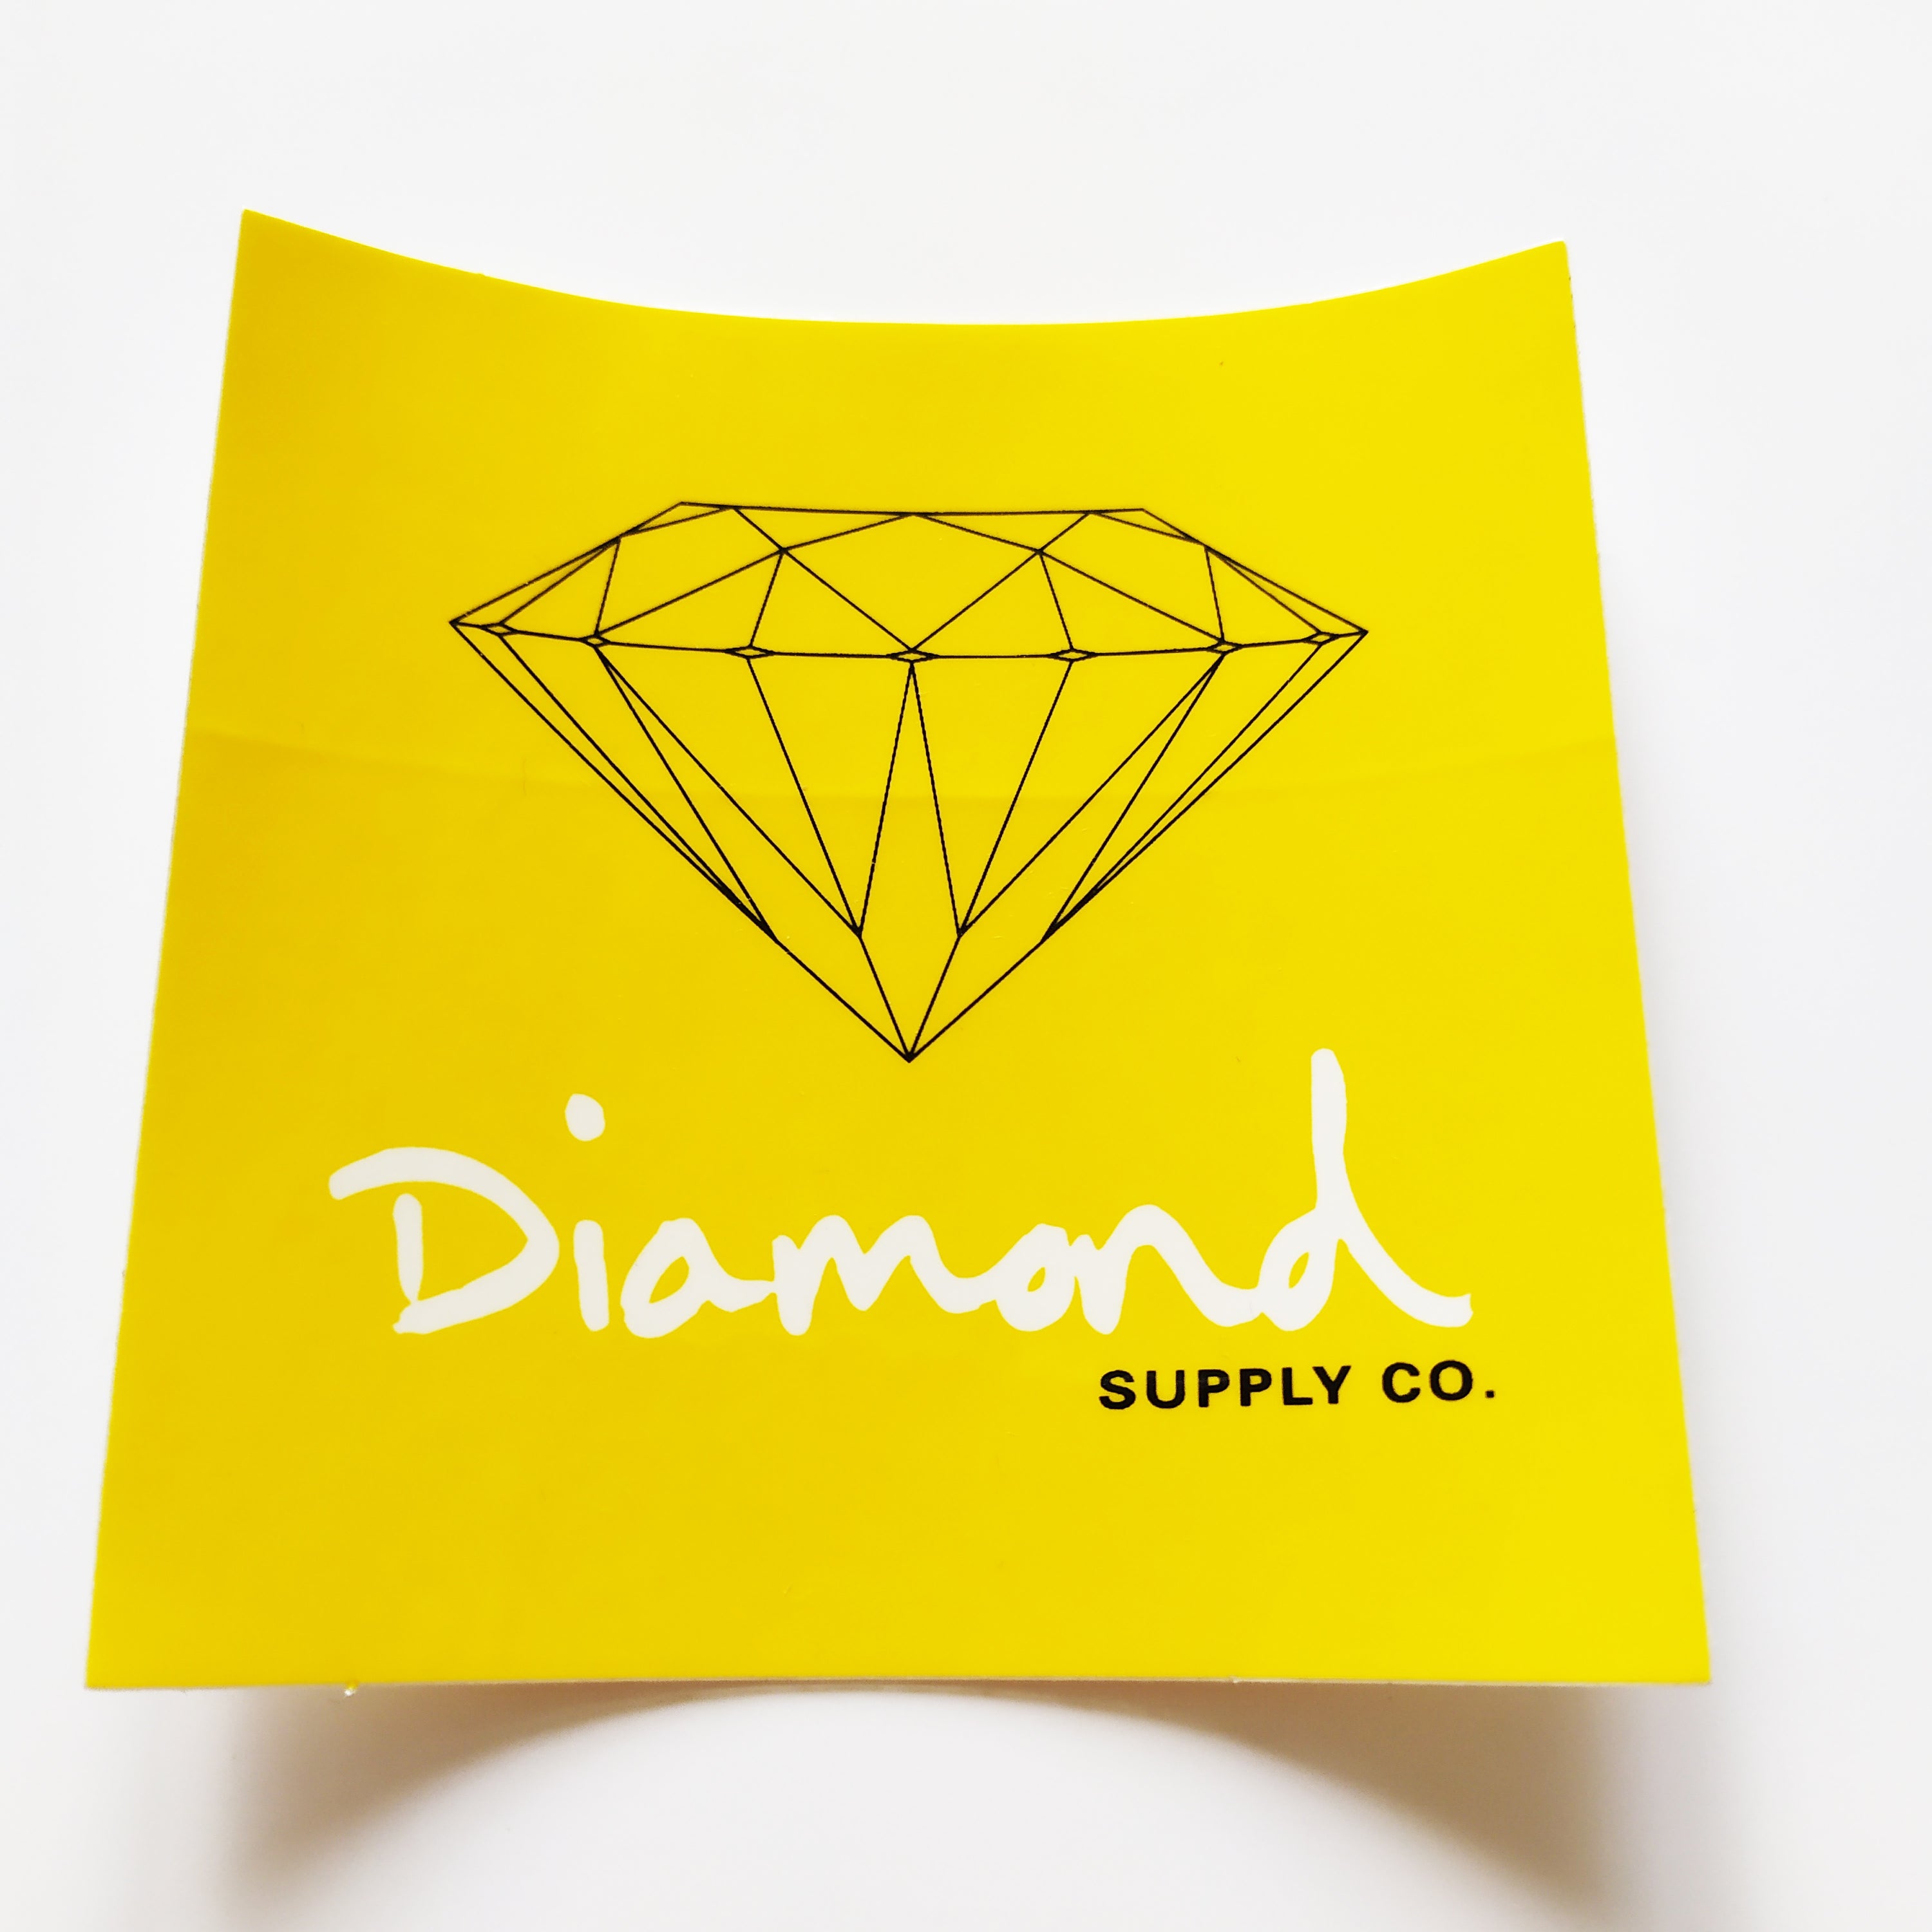 Diamond Supply Co. OG Sign Skateboard Sticker - 7.5cm across approx - SkateboardStickers.com